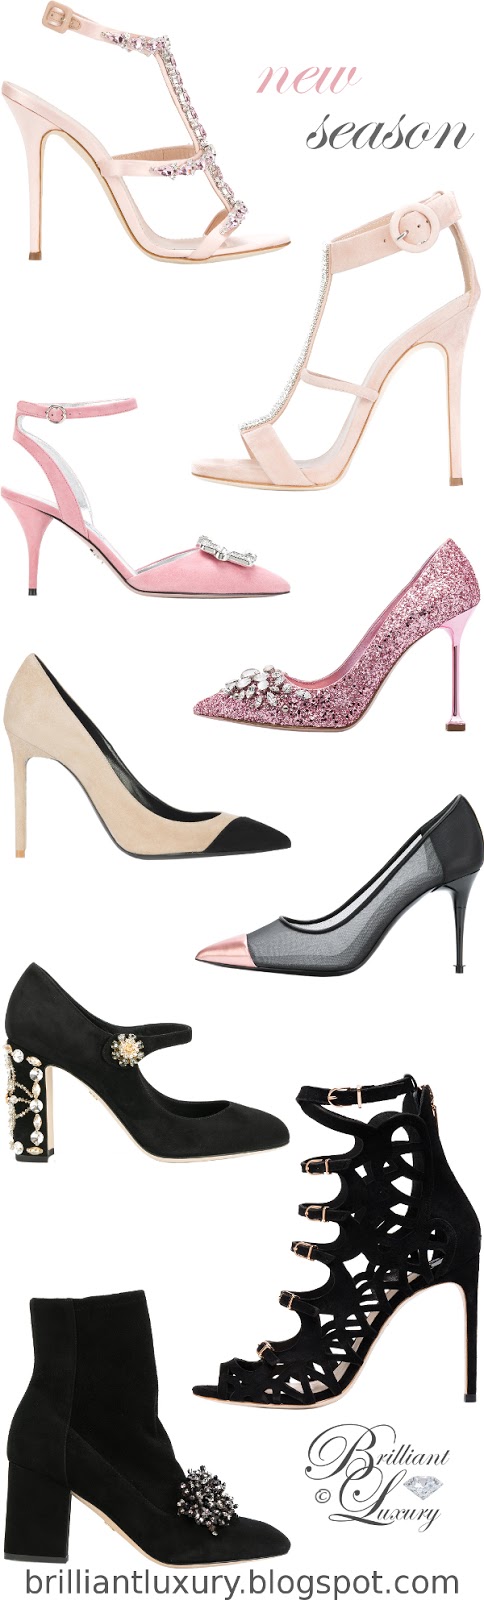 Brilliant Luxury: ♦ high heels ~ new season